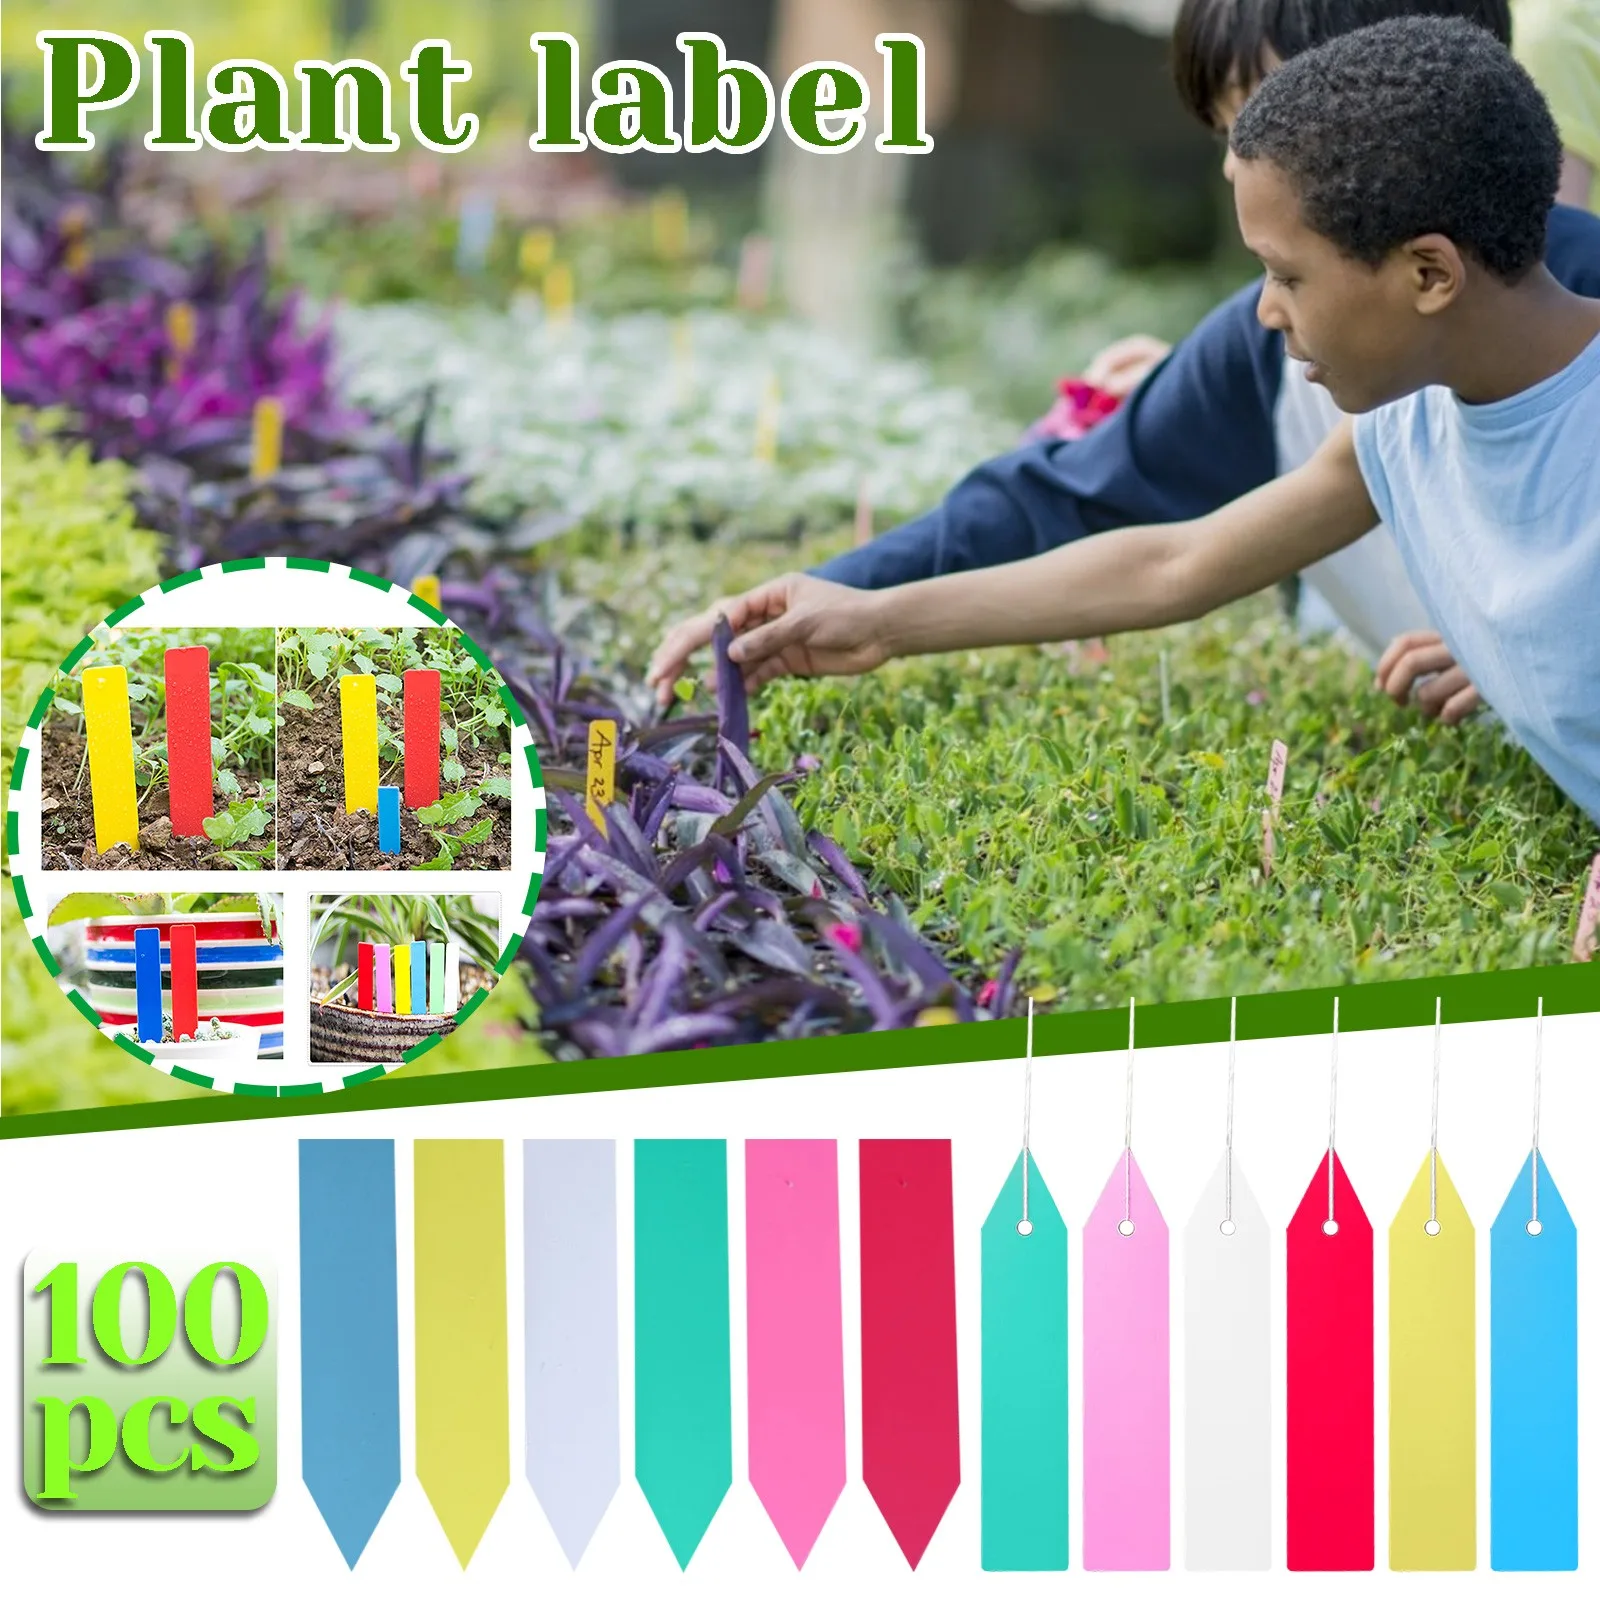 100pcs Waterproof Plant Tags Garden Plant Labels Nursery Markers Flower Pots Seedling Labels Tray Mark Garden Accessories #WT